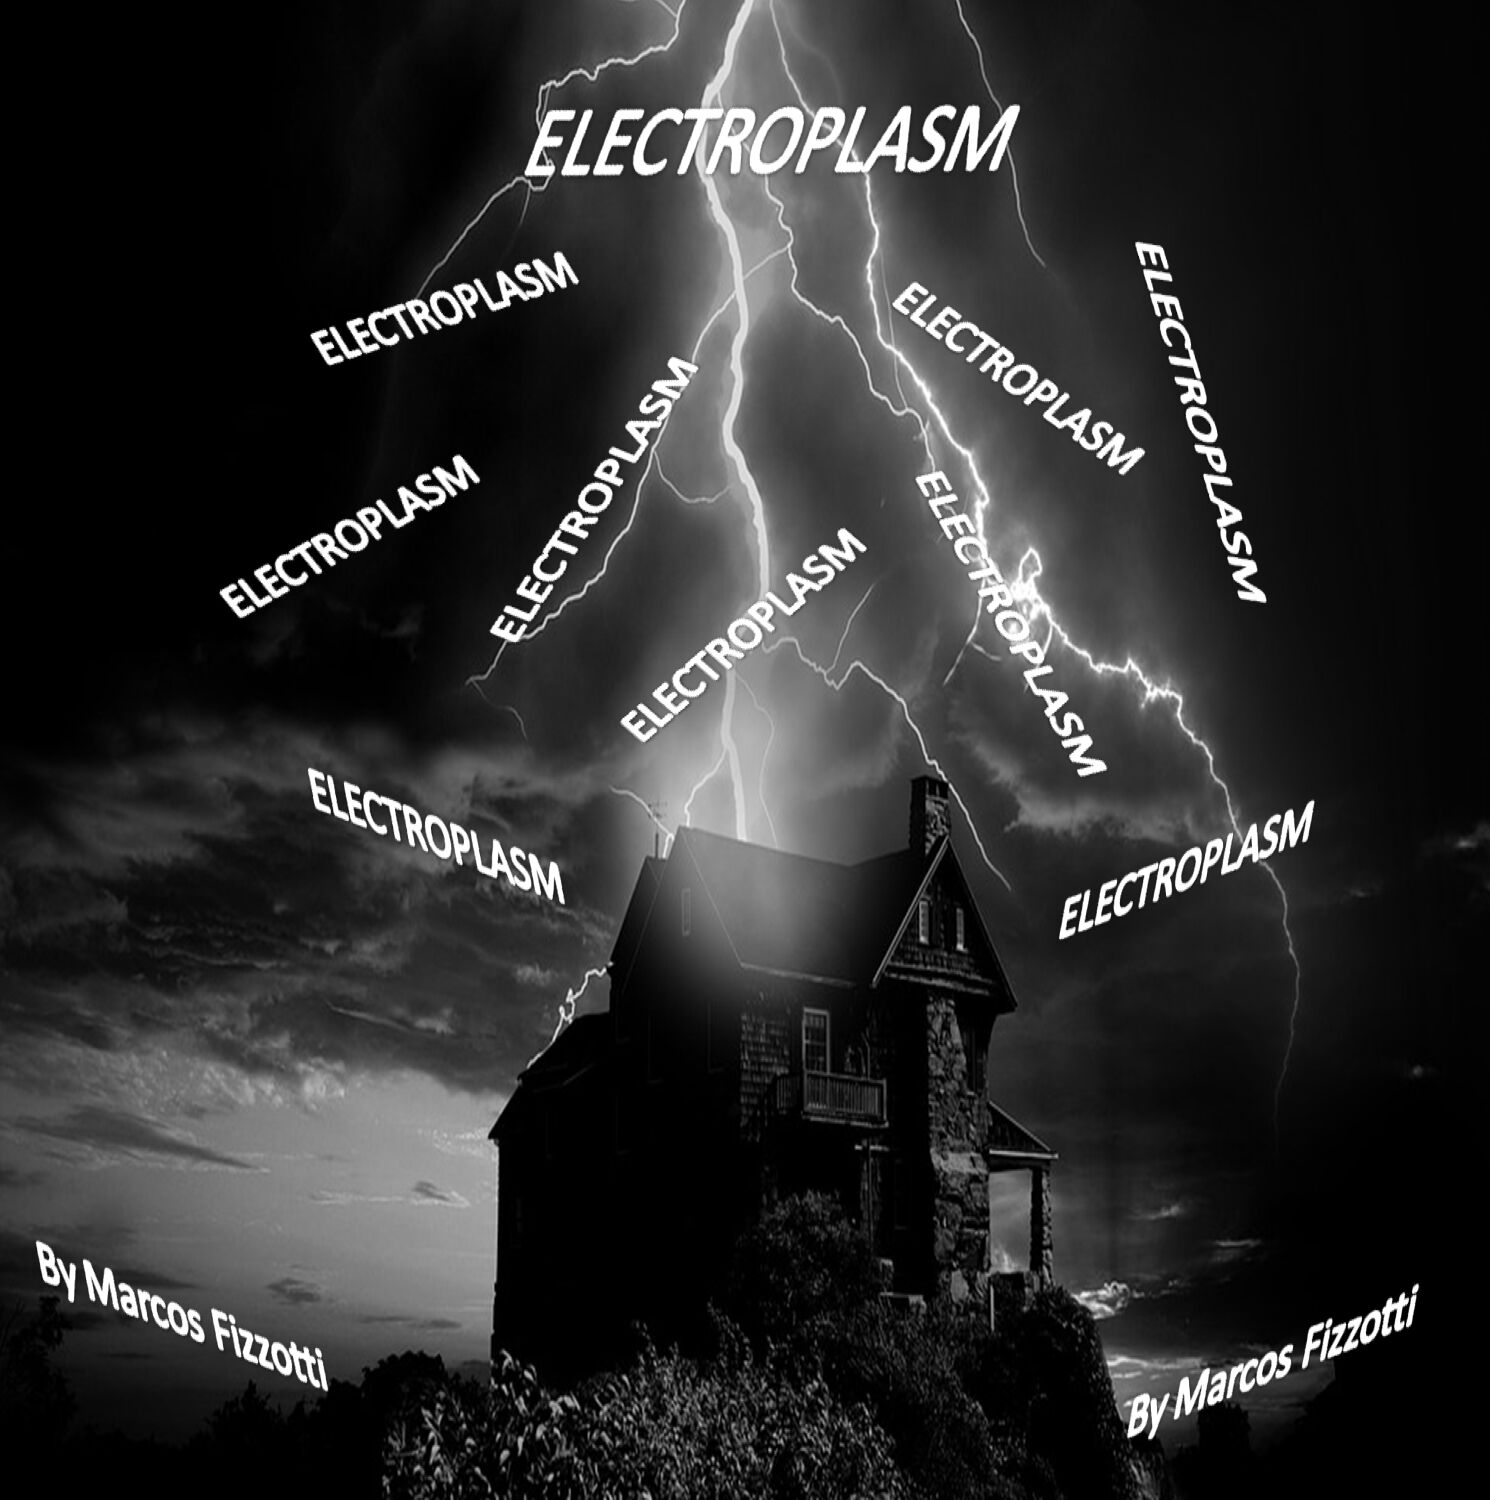 ELECTROPLASM